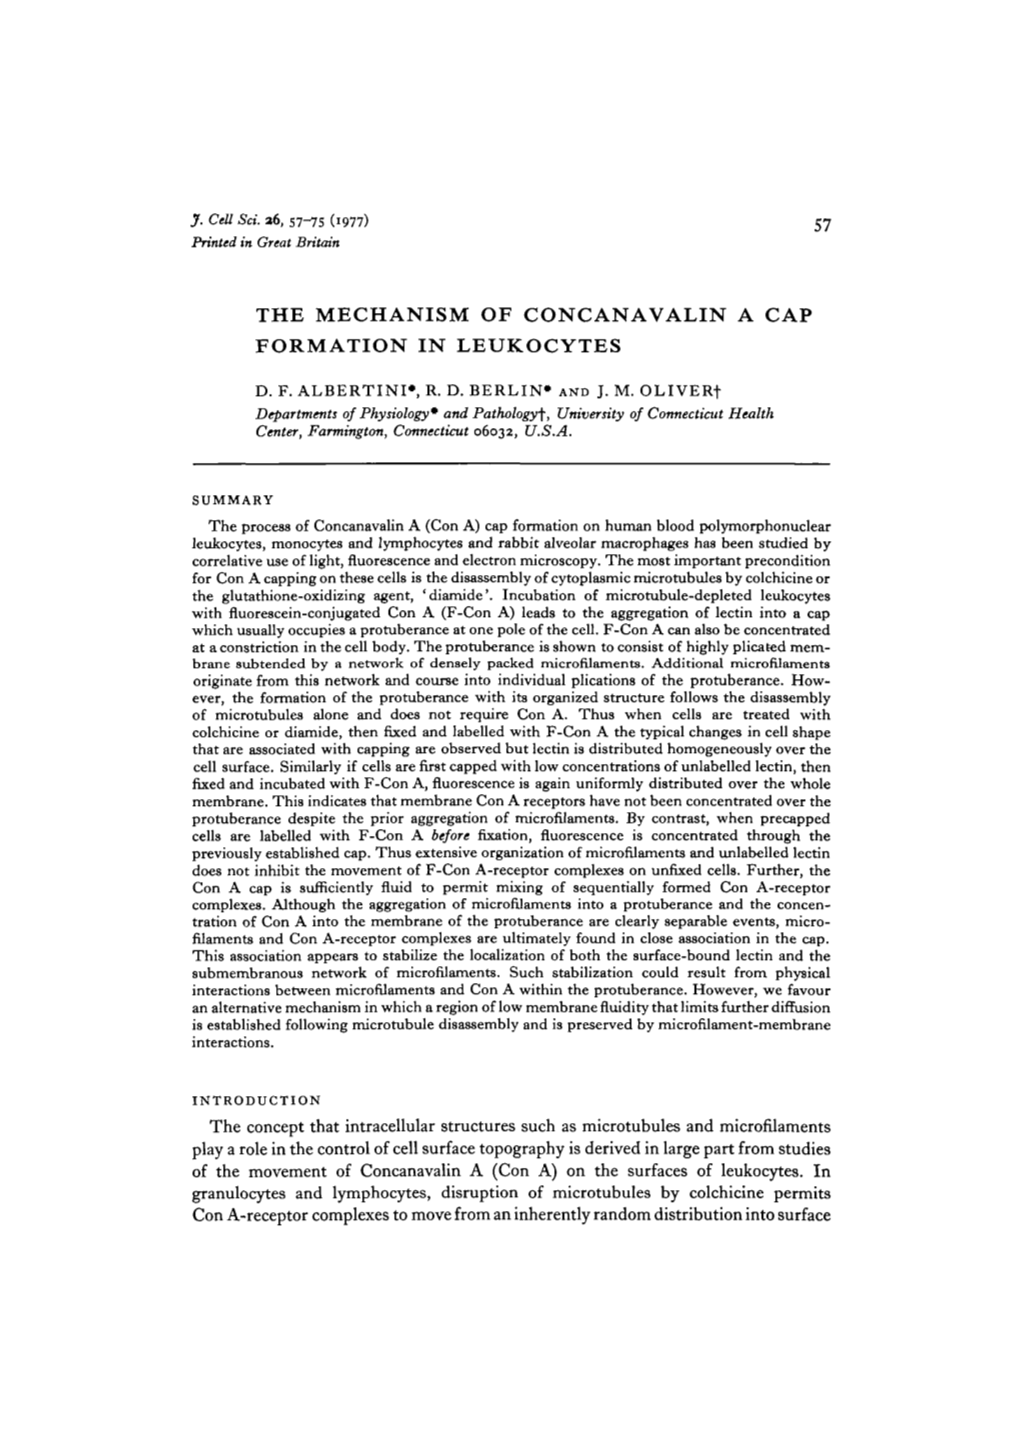 The Mechanism of Concanavalin a Cap Formation in Leukocytes